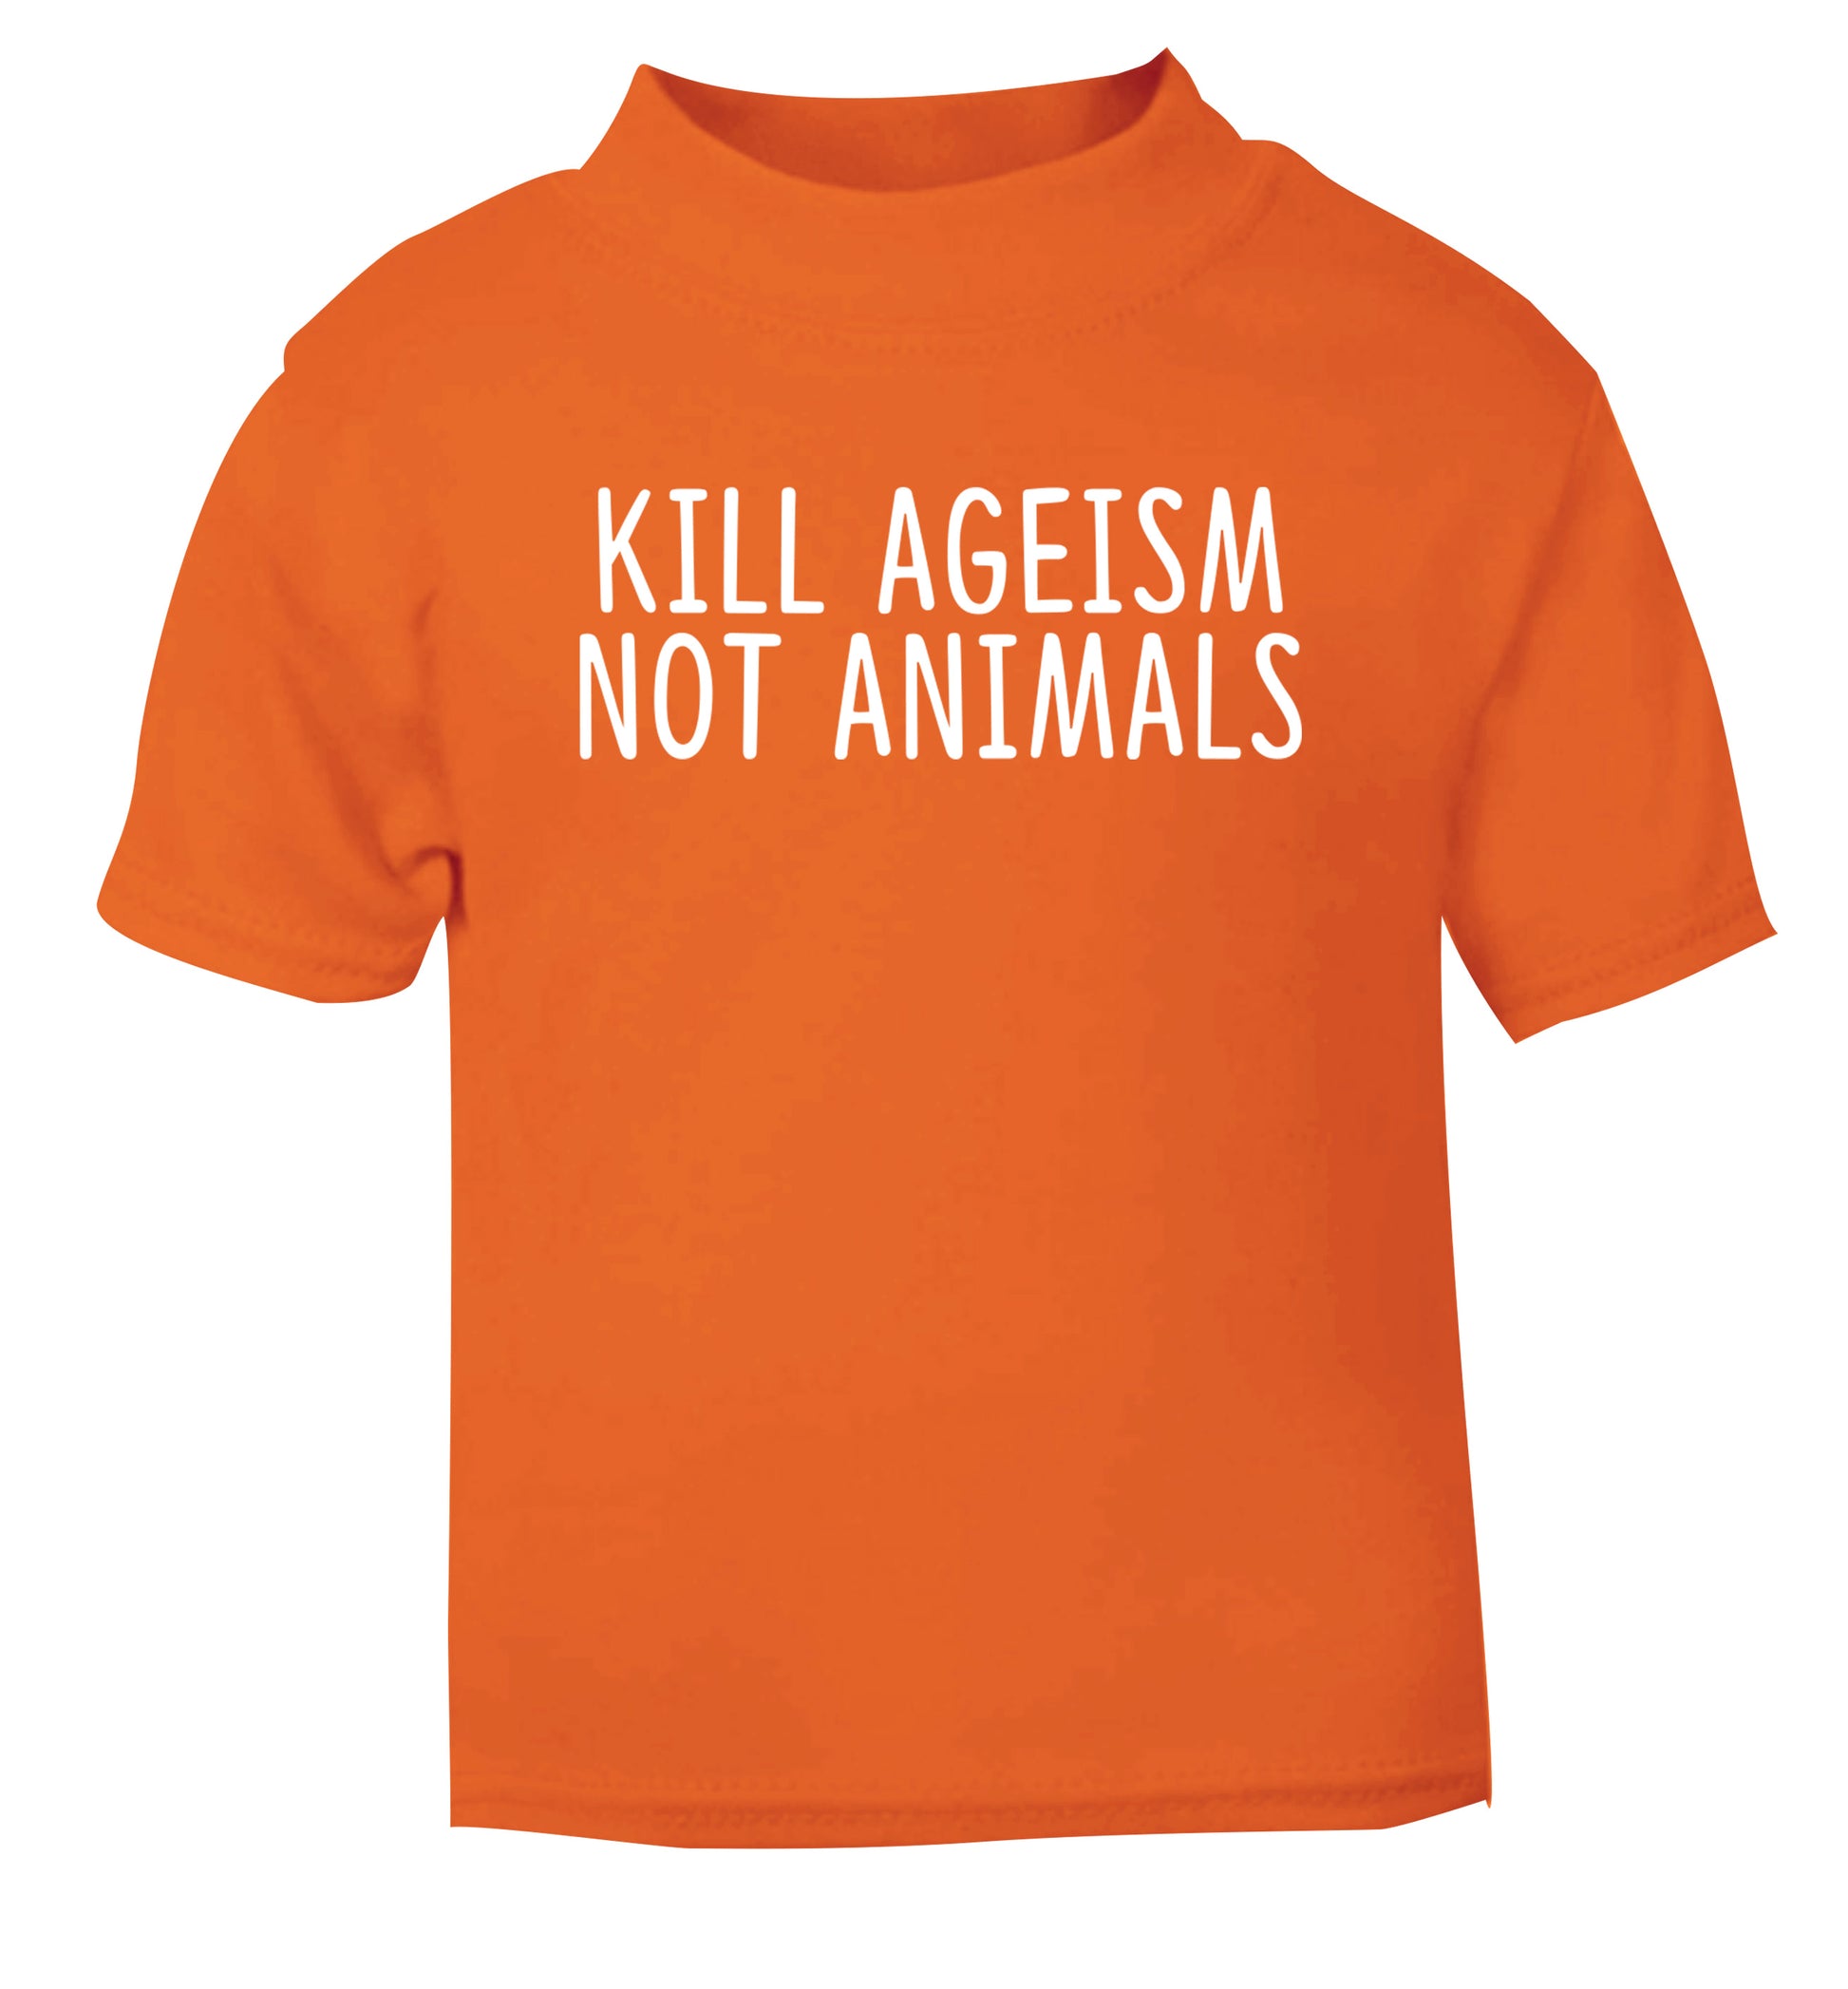 Kill Ageism Not Animals orange Baby Toddler Tshirt 2 Years